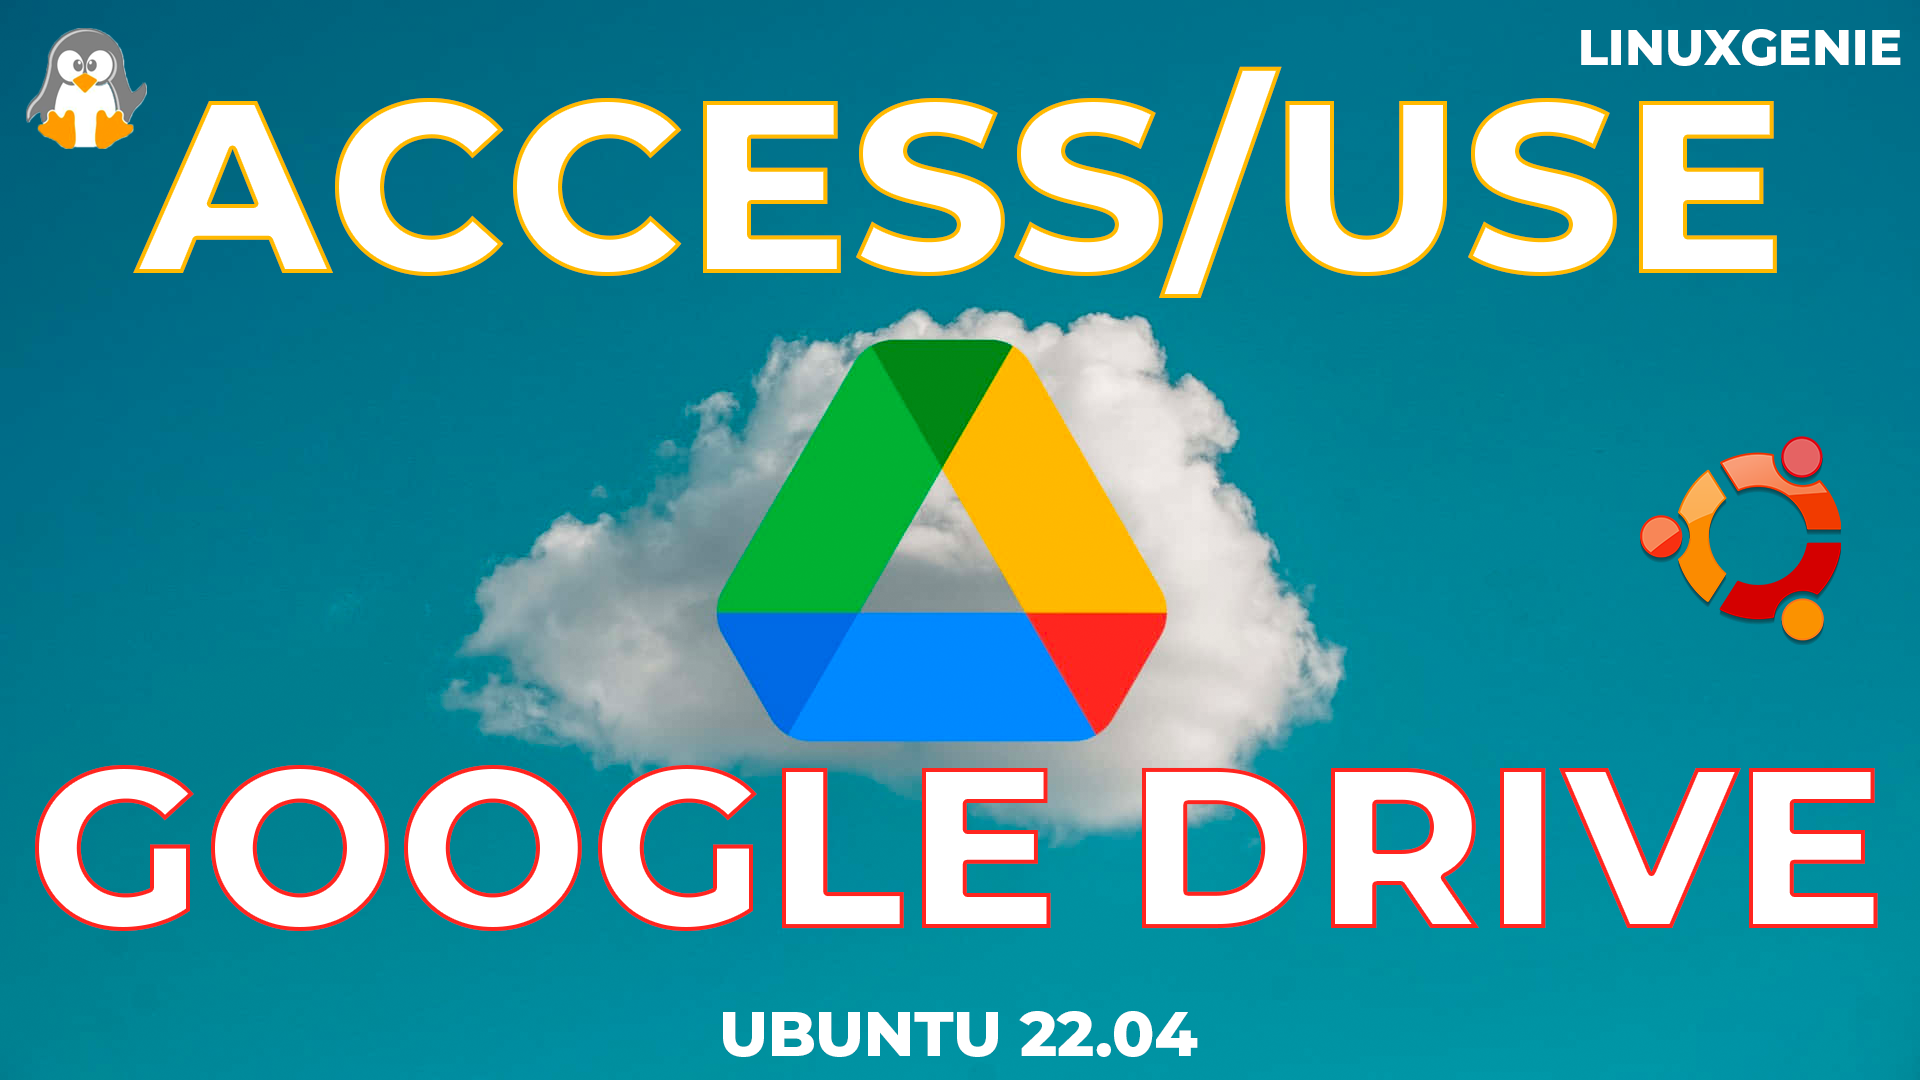 How to Access/Use Google Drive on Ubuntu 22.04